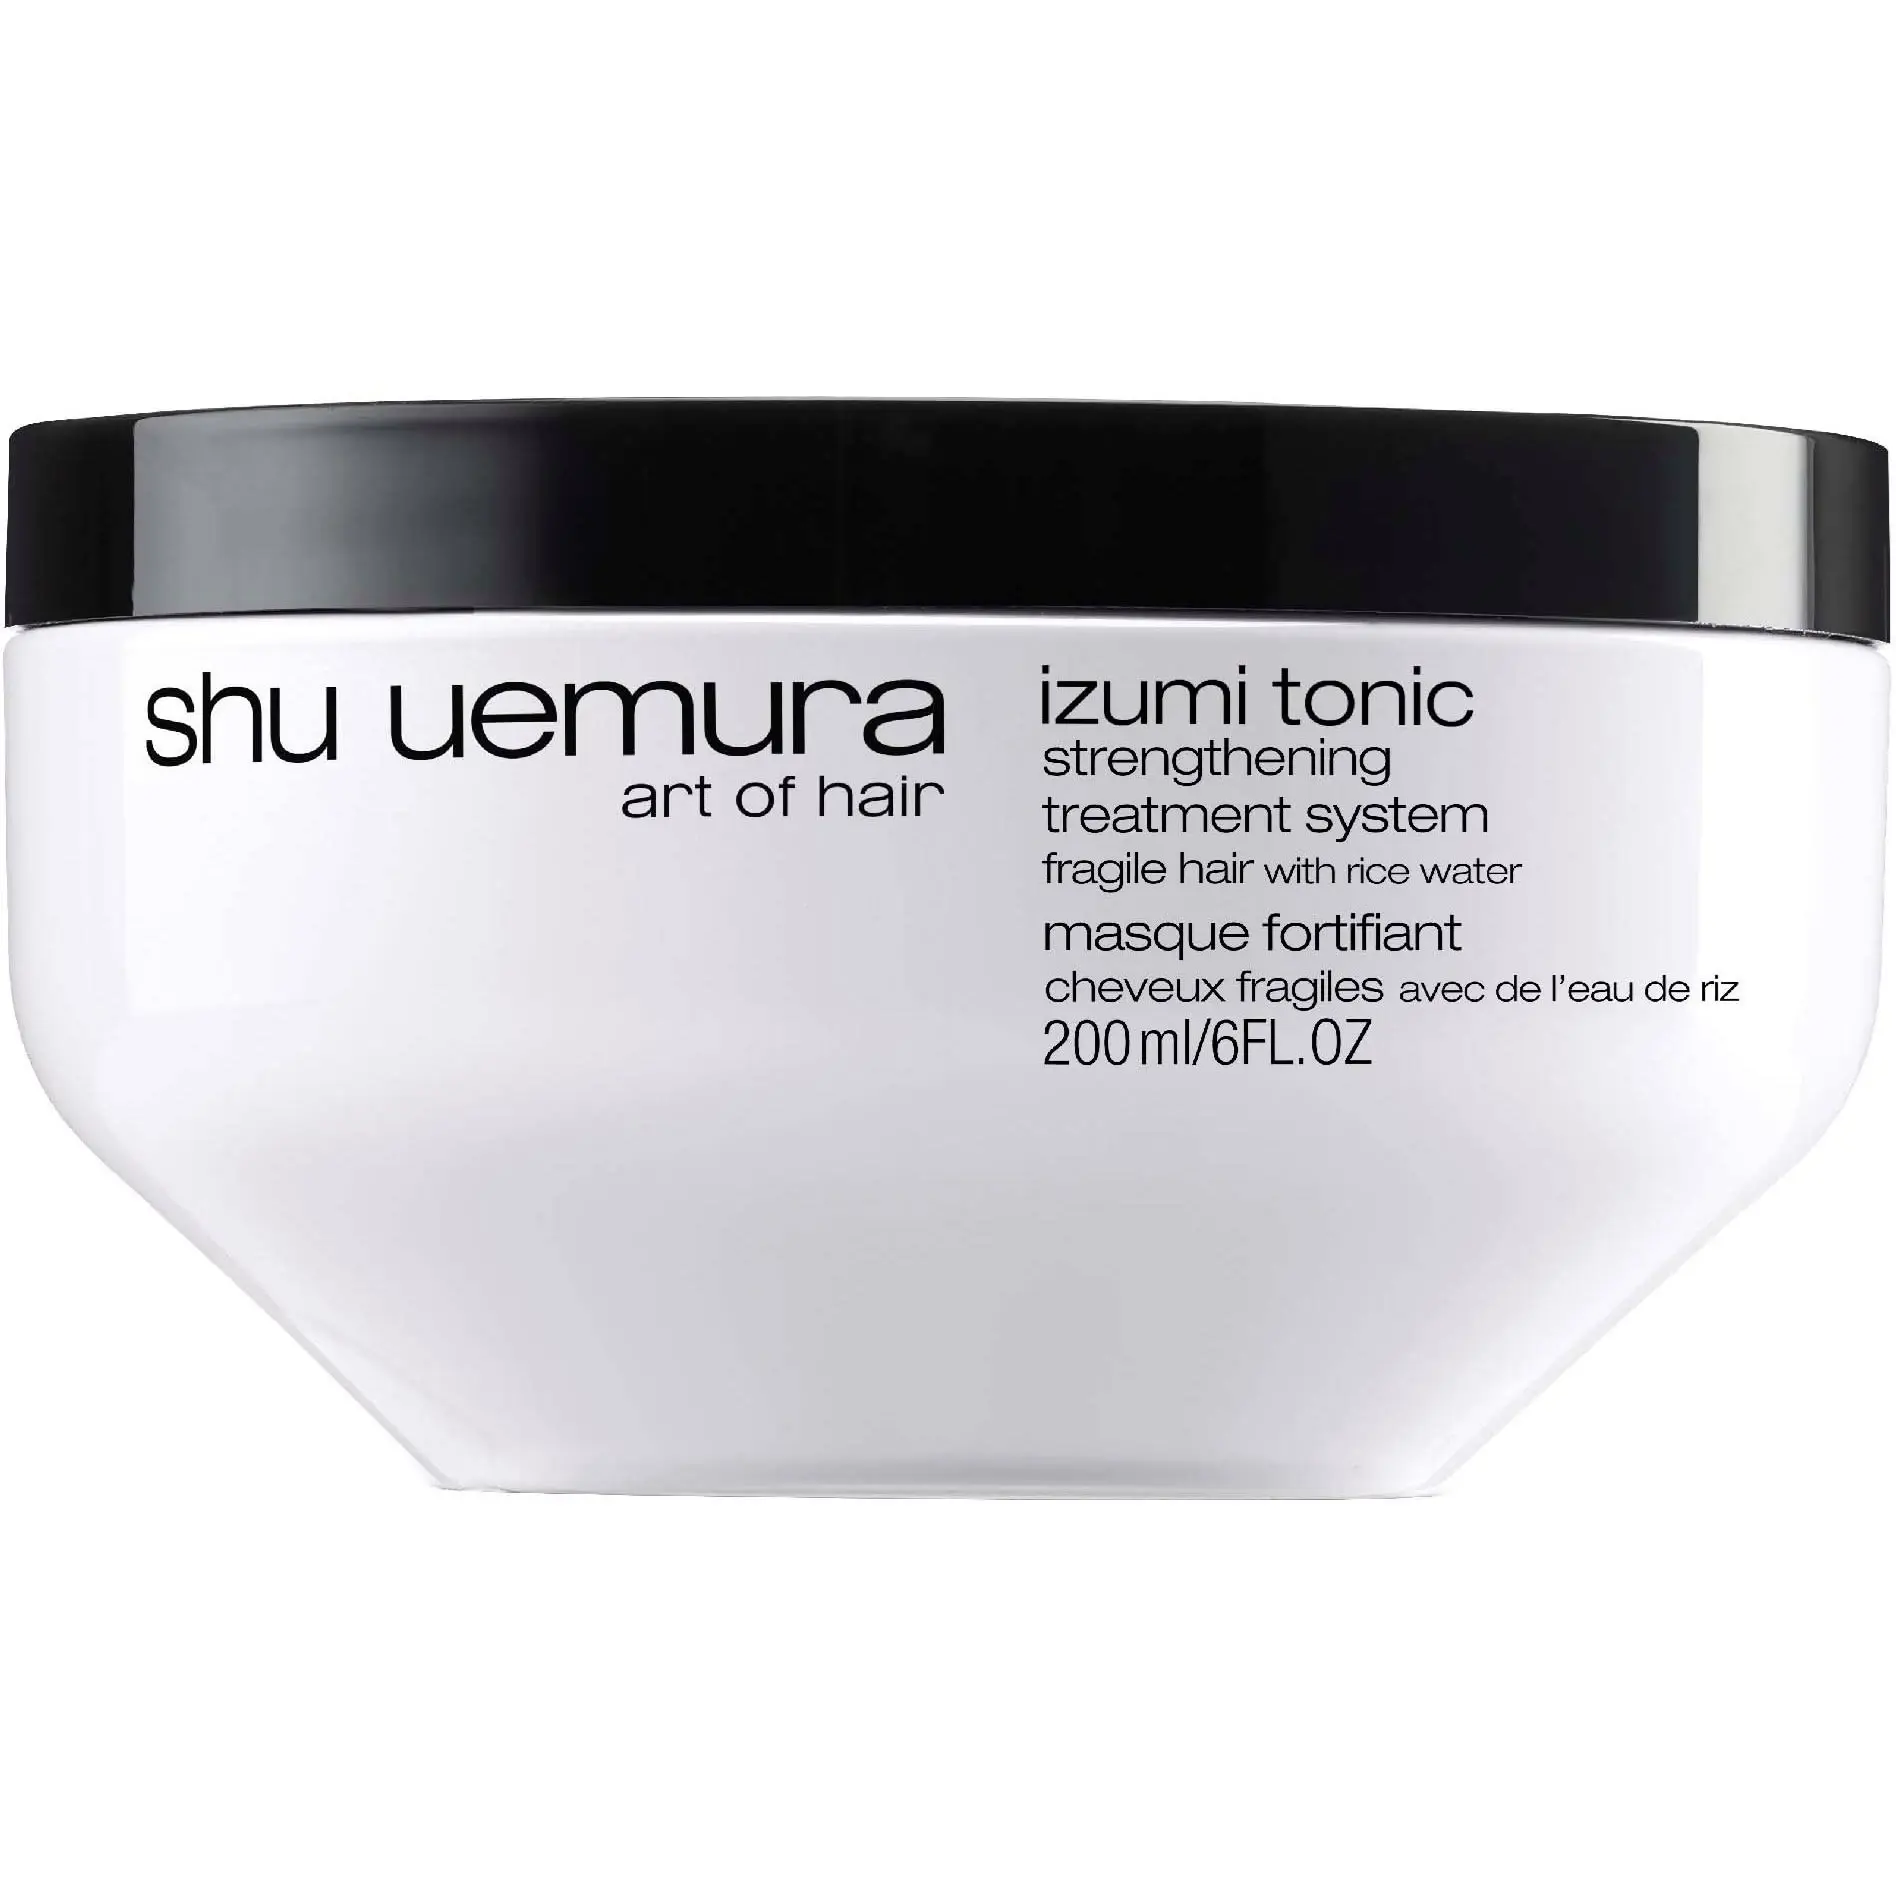 Shu Uemura Izumi Tonic Strengthening Mask (200 ml)